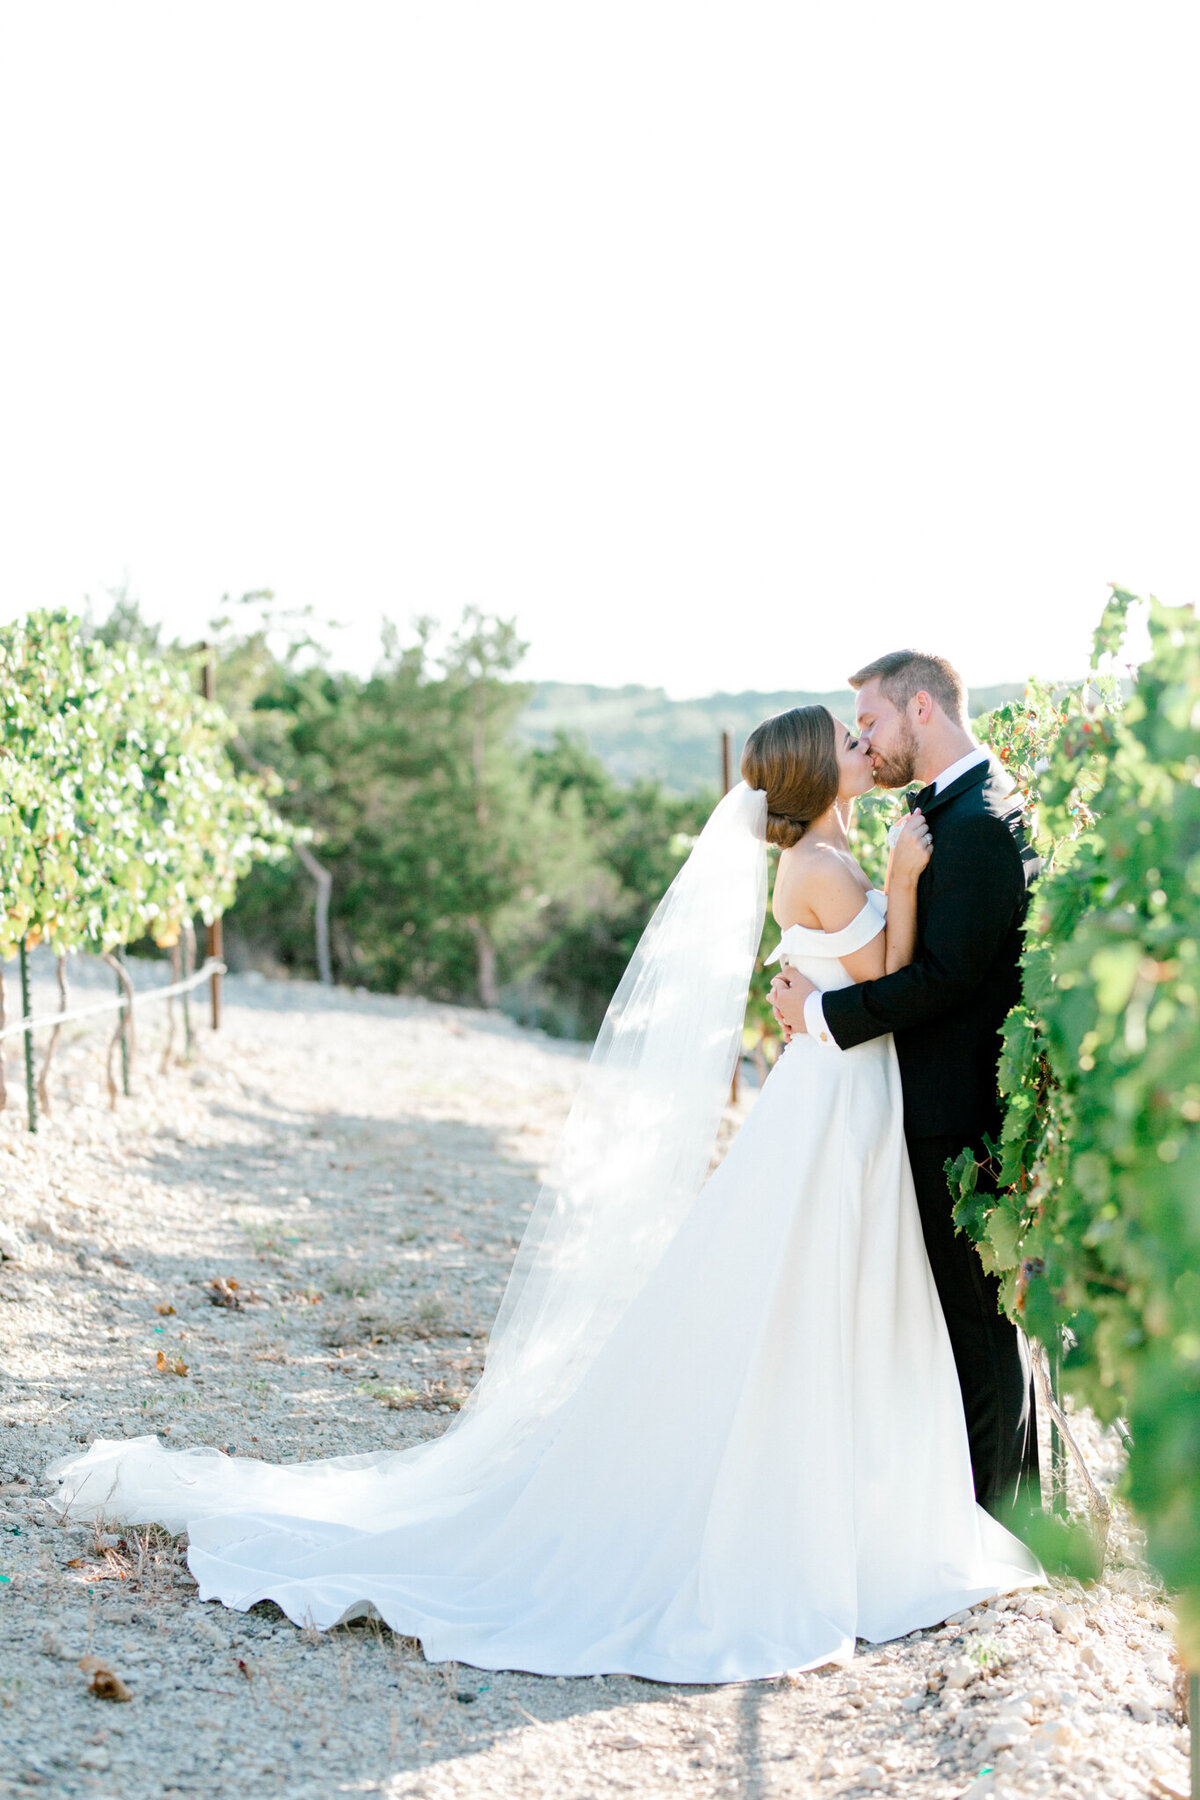 Lexi Broughton & Garrett Greer Wedding at Dove Ridge Vineyards | Sami Kathryn Photography | Dallas Wedding Photography-139